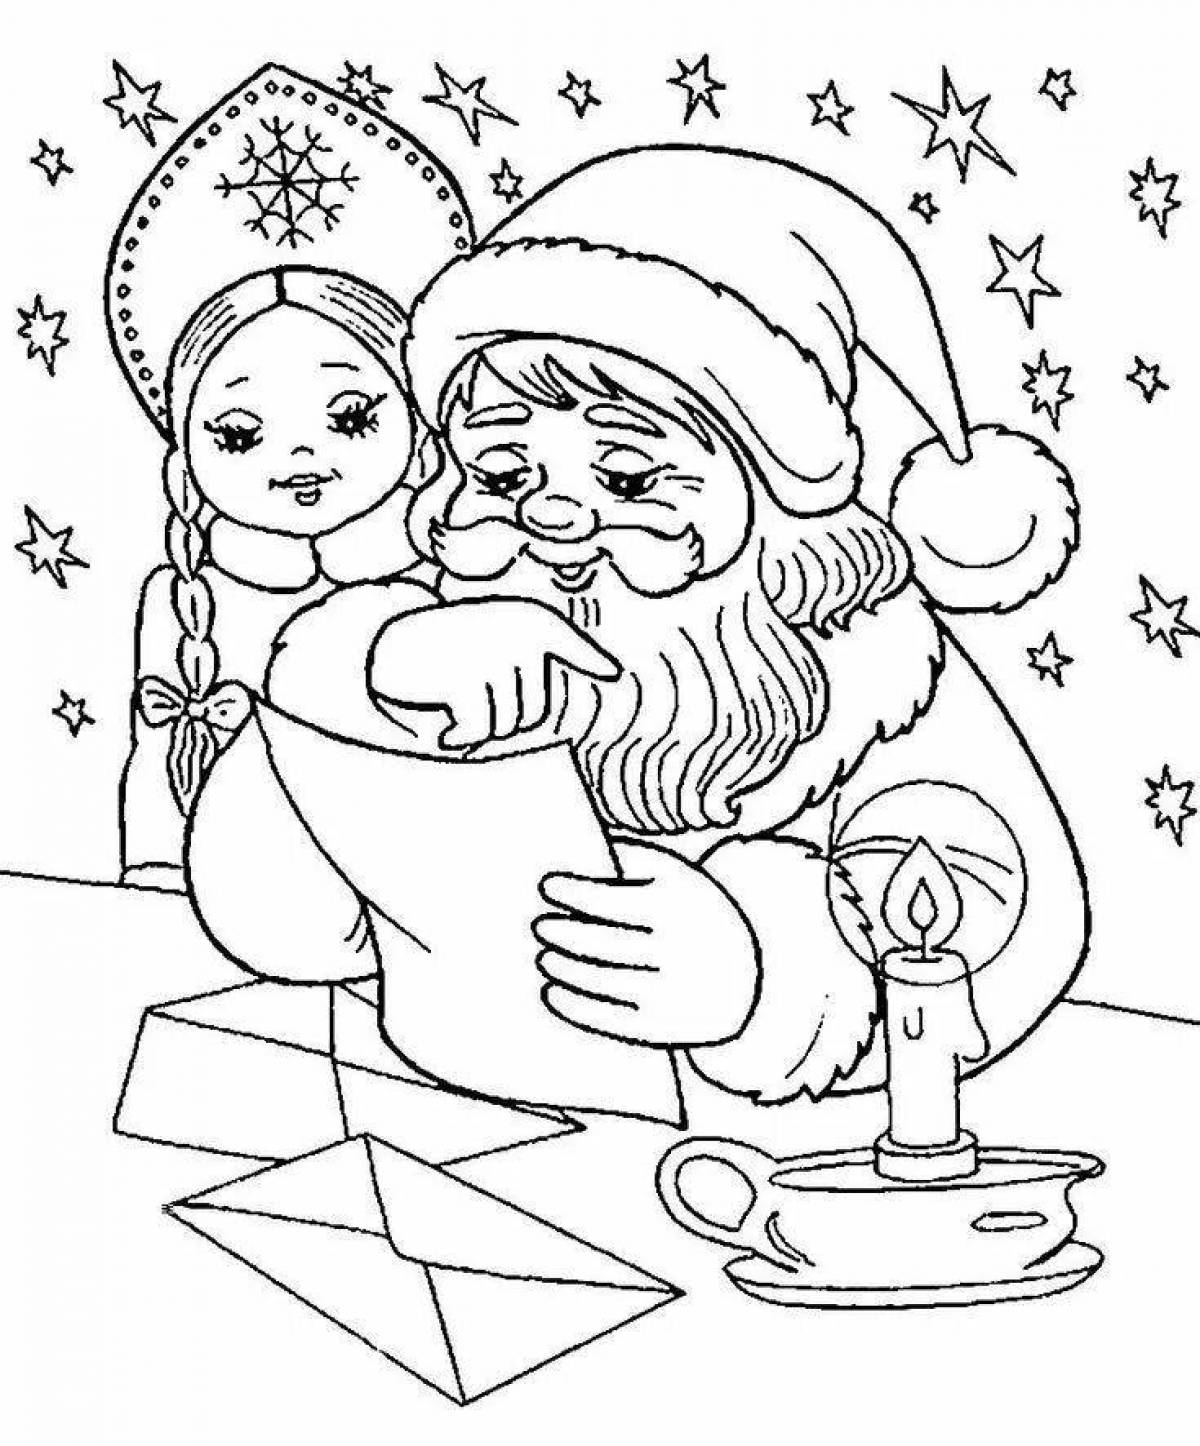 Marvelous santa claus coloring book for kids